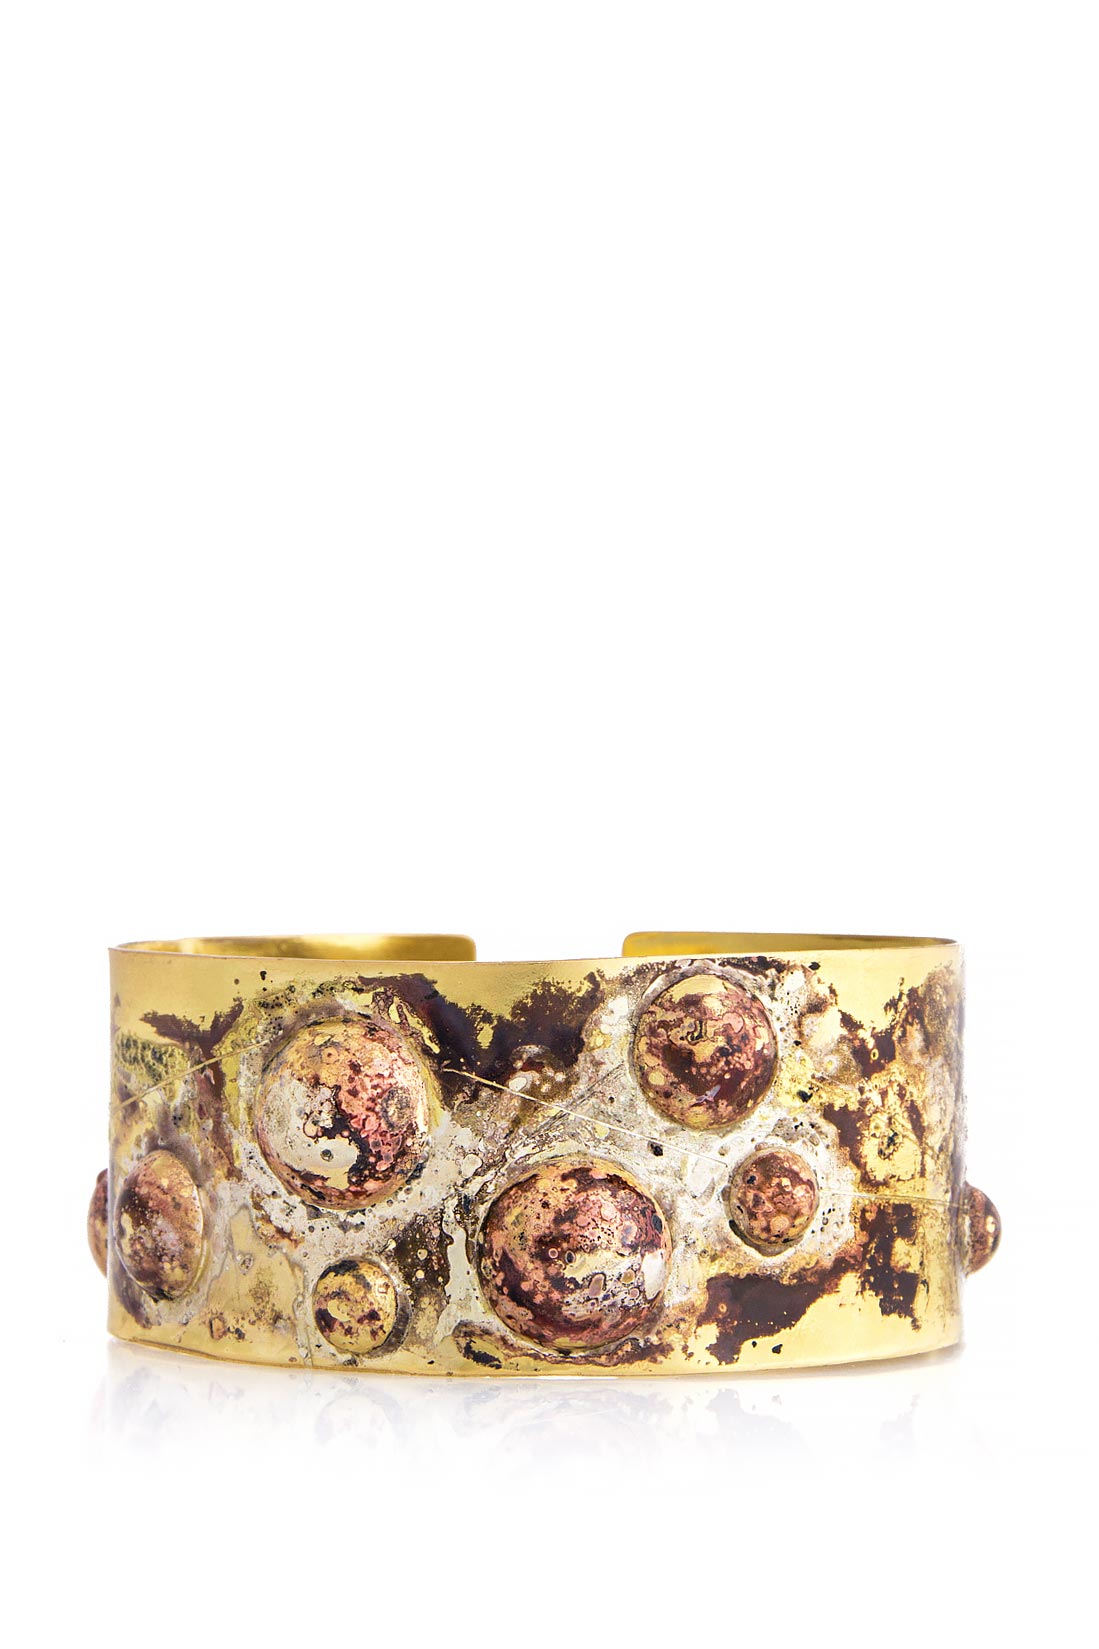 Silver bracelet in gold-tone brass Eneada image 0